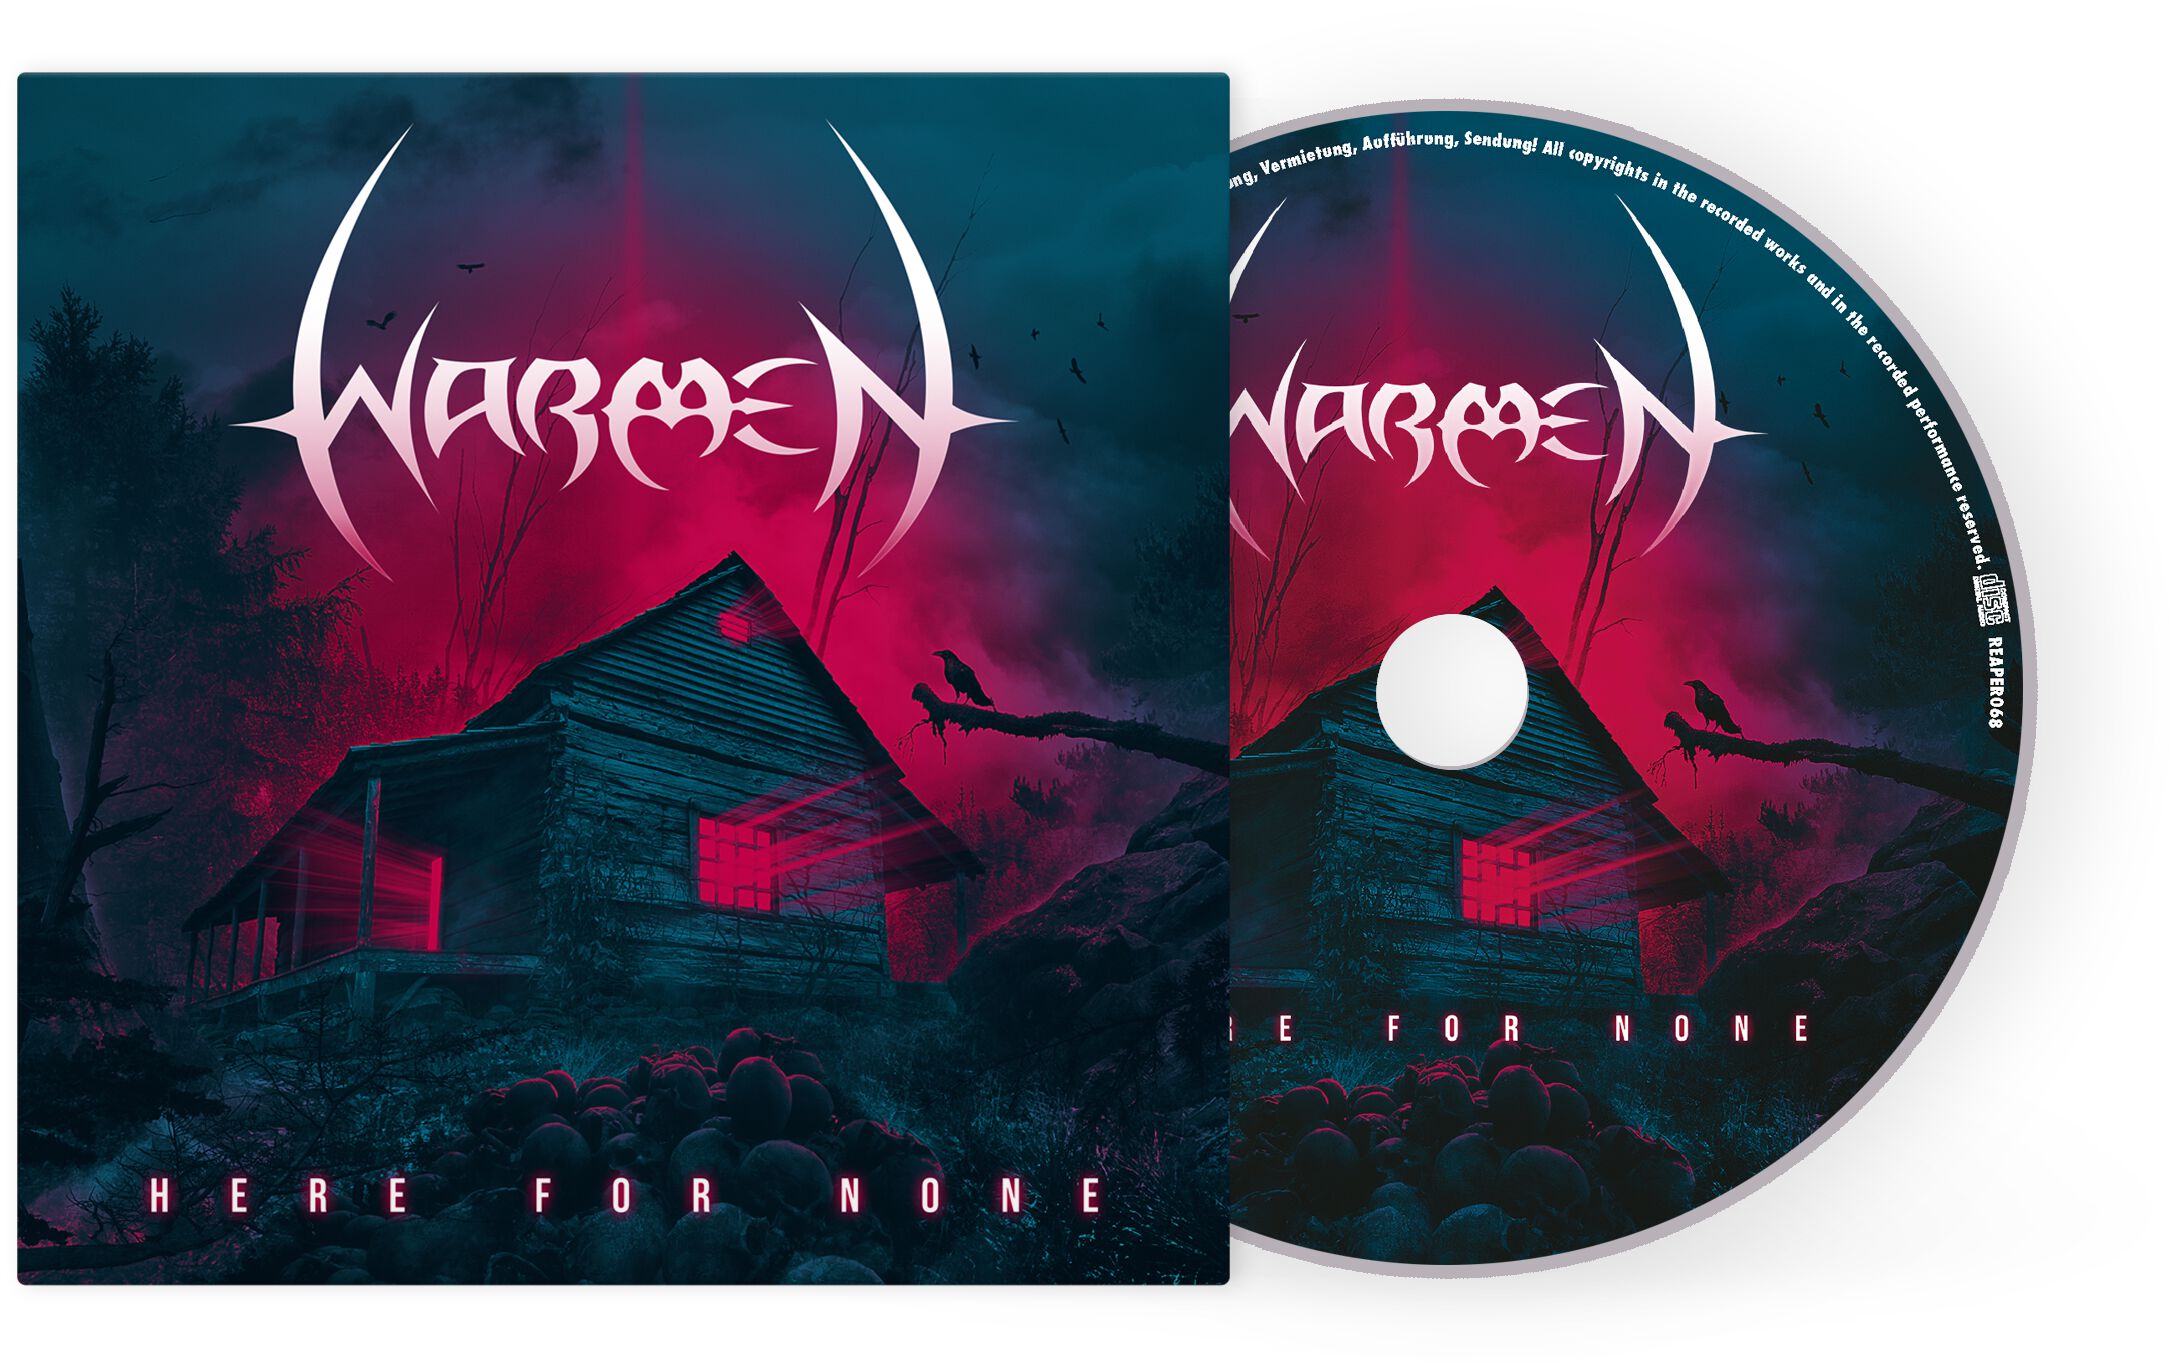 Here for none von Warmen - CD (Digipak, Limited Edition)